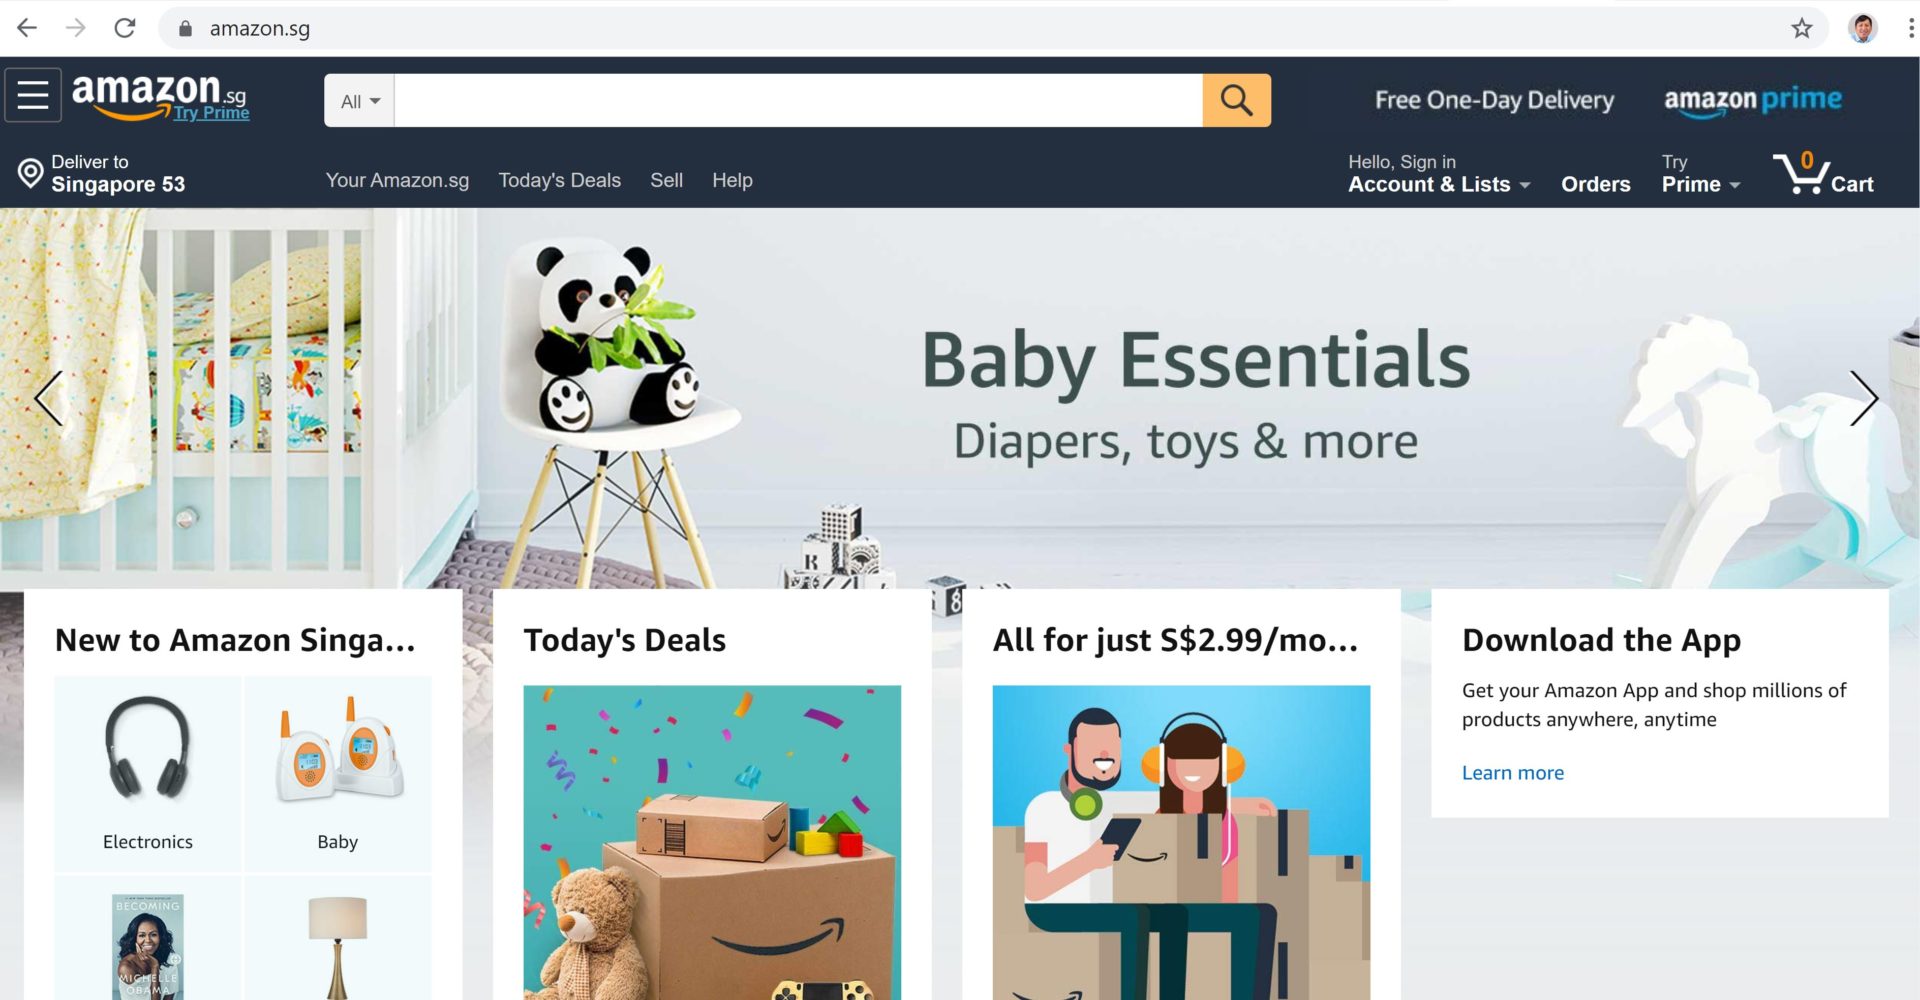 Amazon finally opens full online store in Singapore - Techgoondu